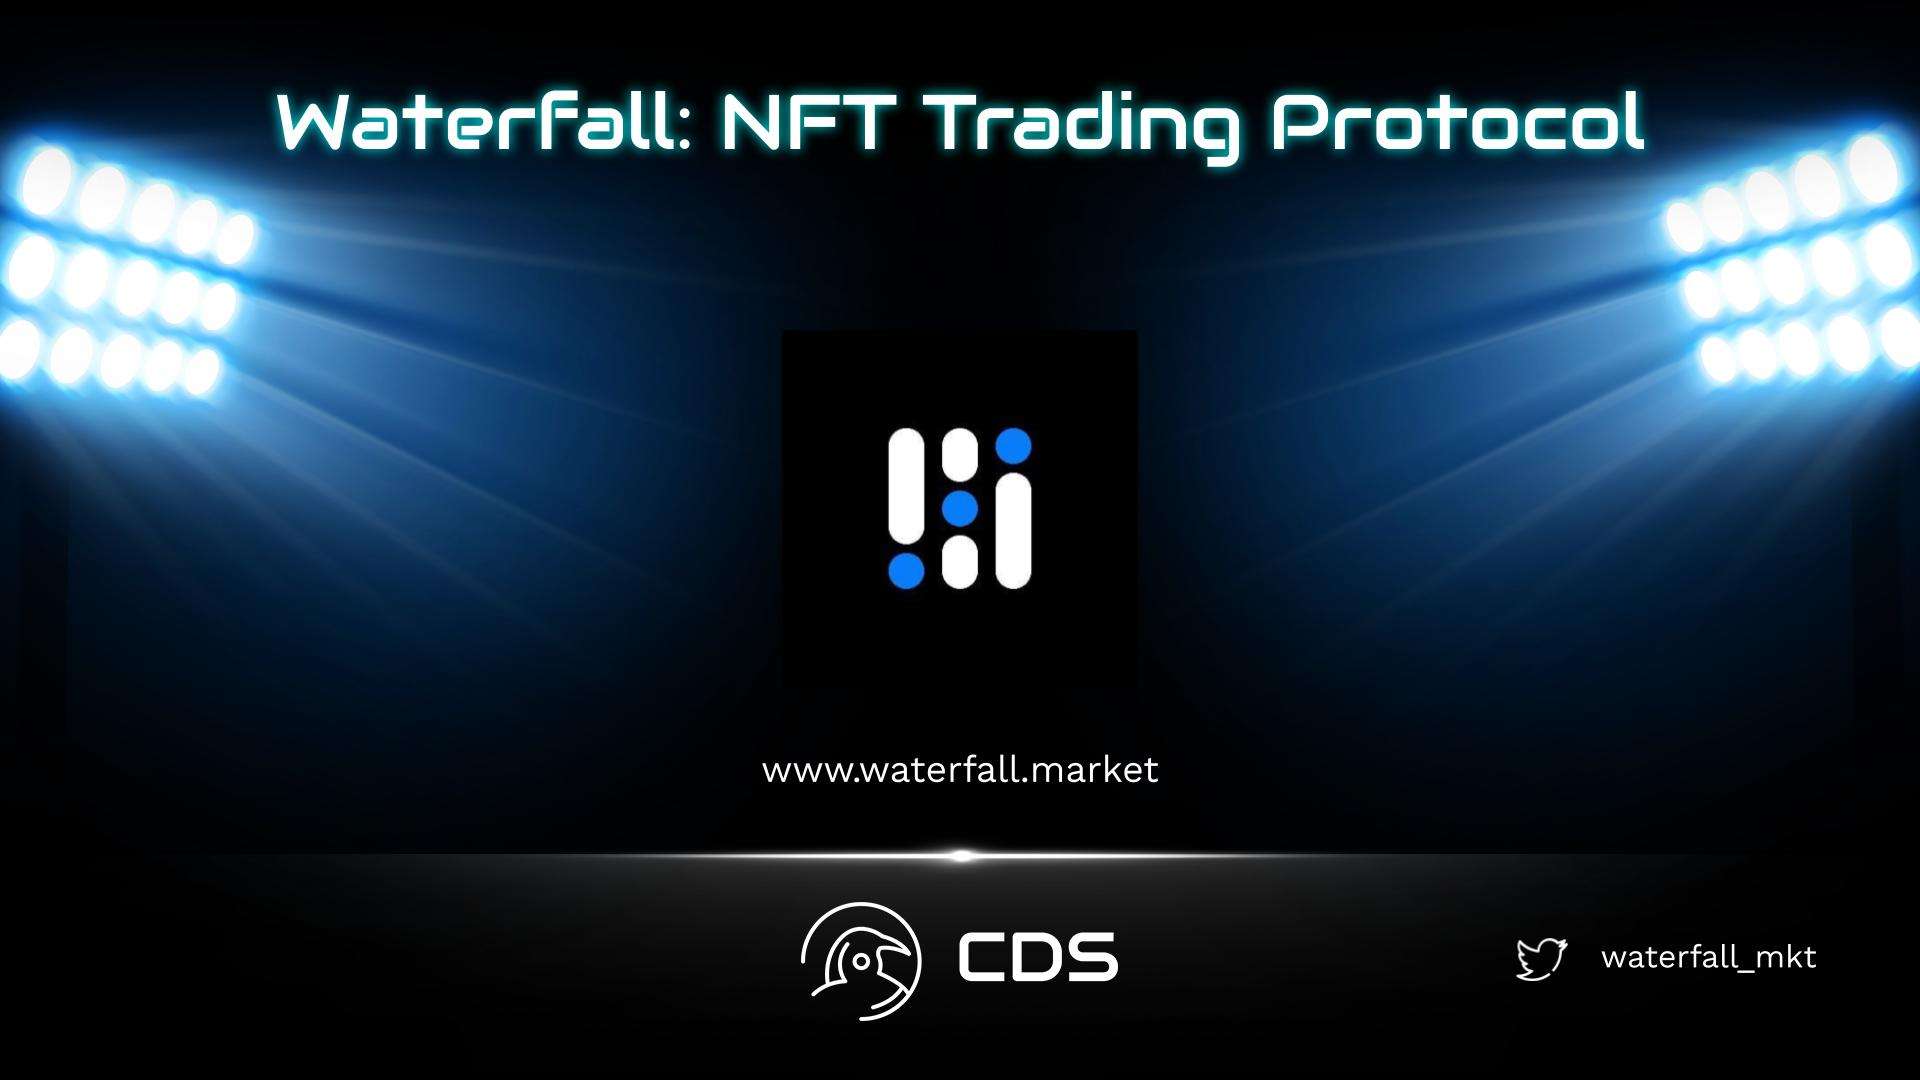 Waterfall: NFT Trading Protocol